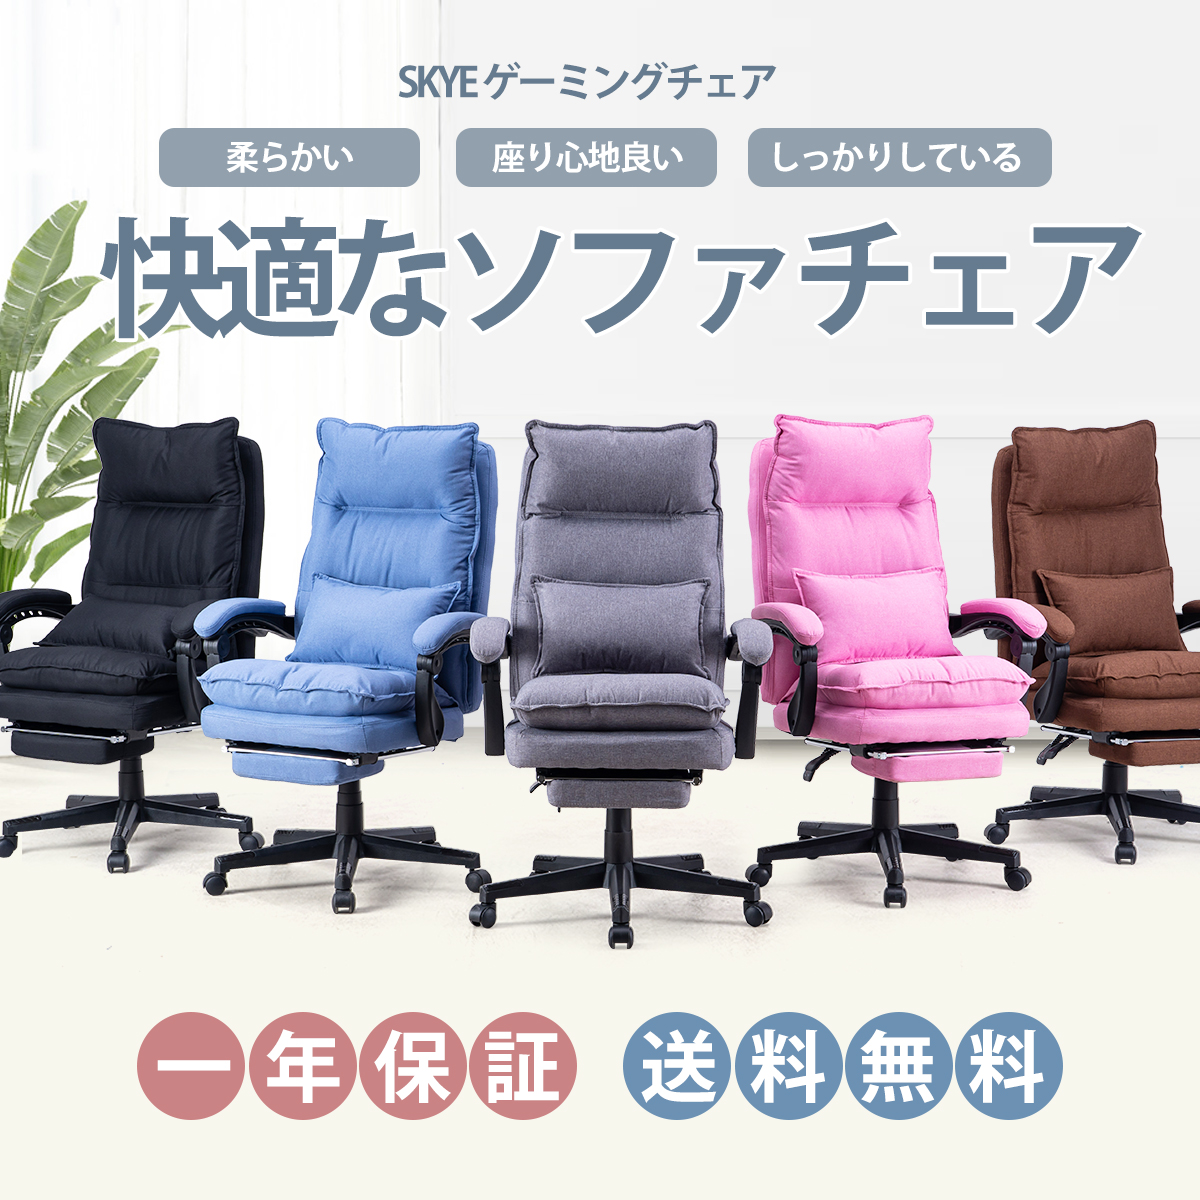 SKYE ゲーミングチェア デスクチェア - 椅子